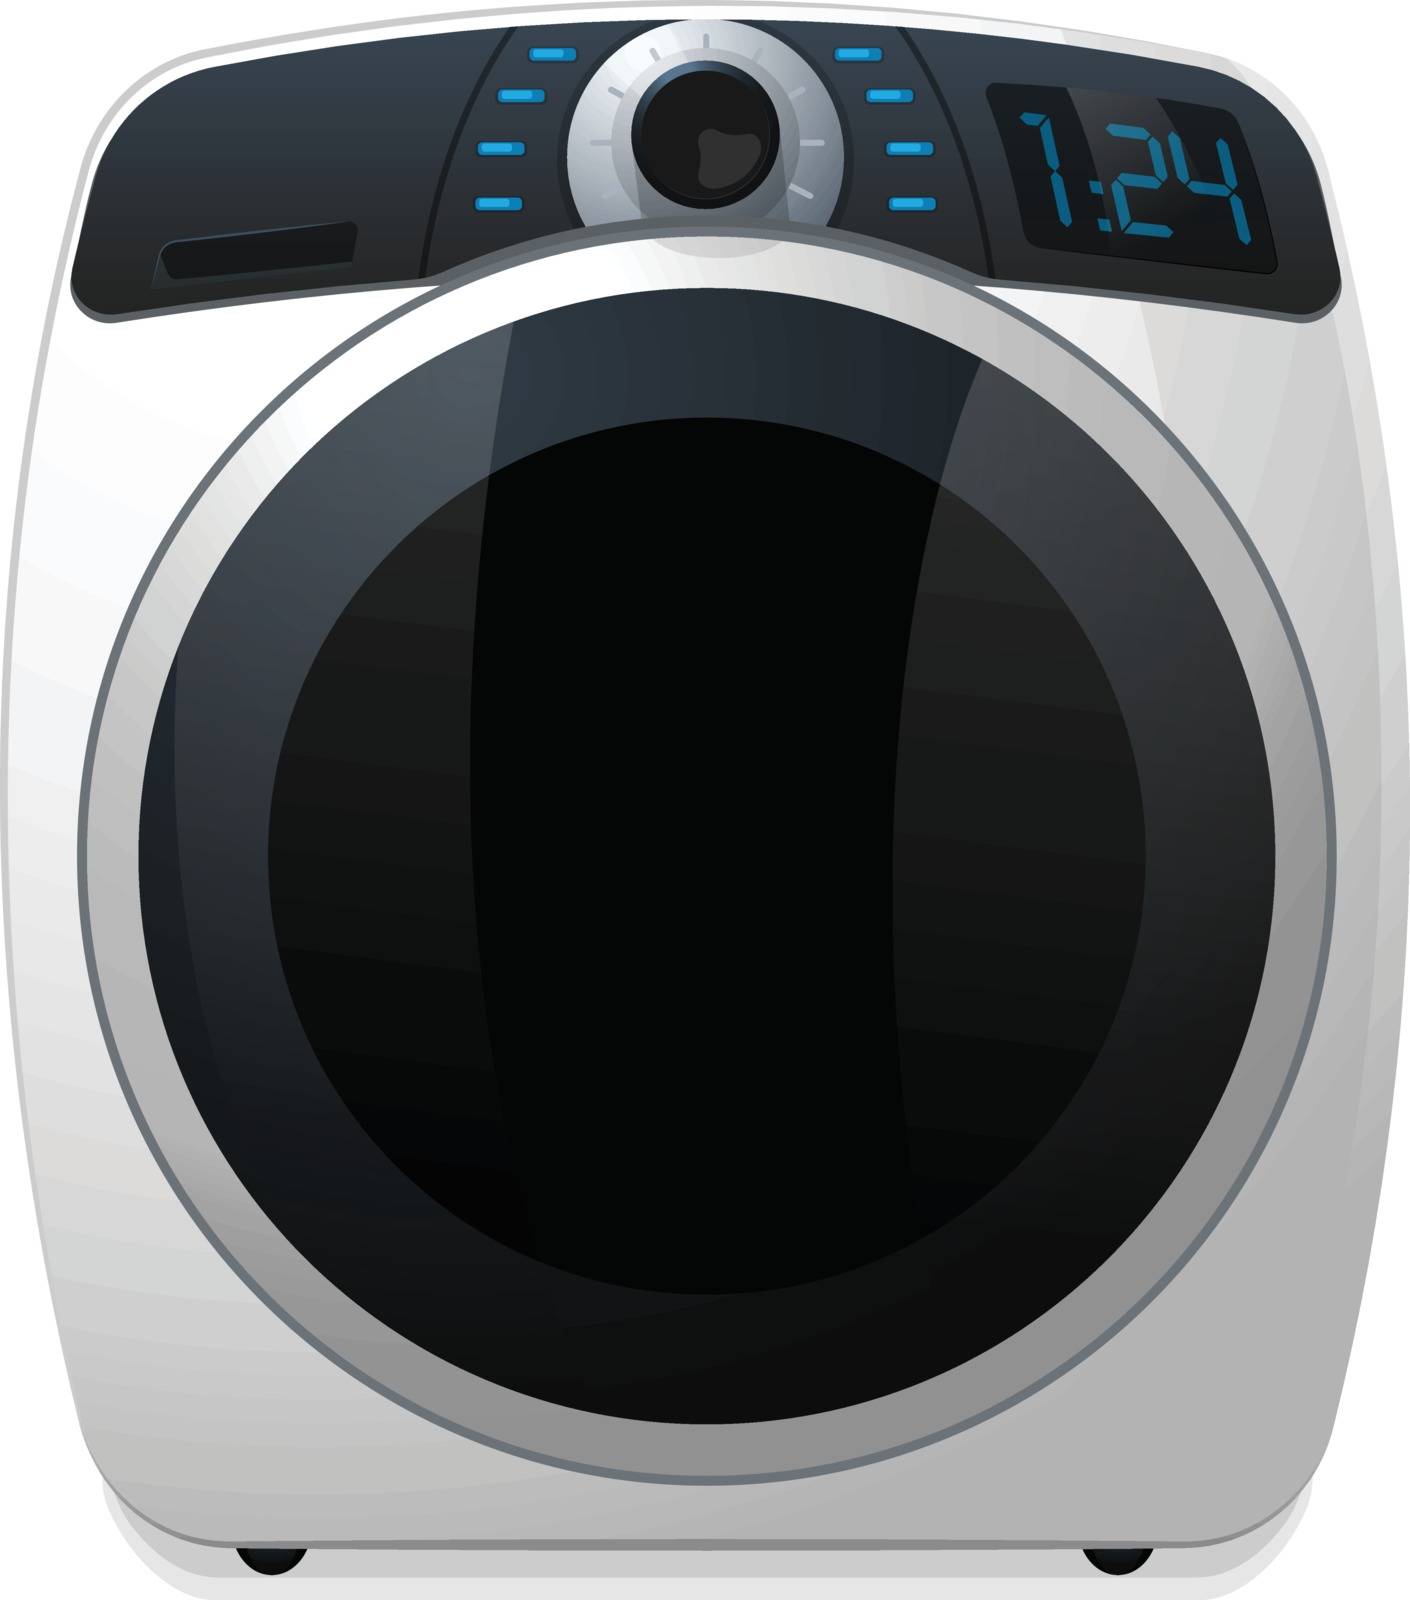 Modern washer machine icon realistic vector illustration